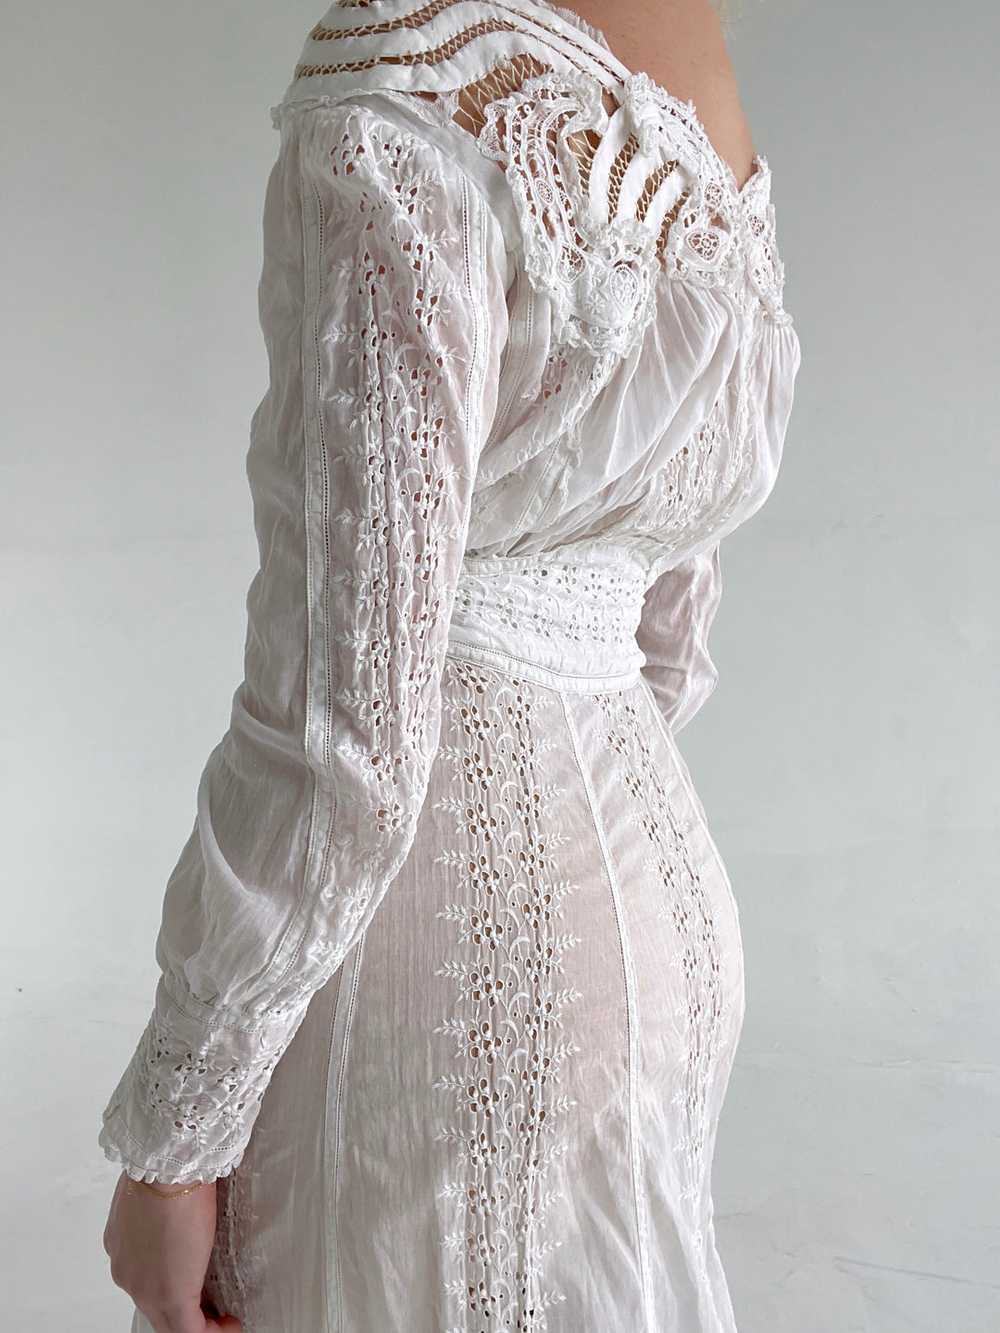 Victorian White Cotton Lawn Dress - image 9